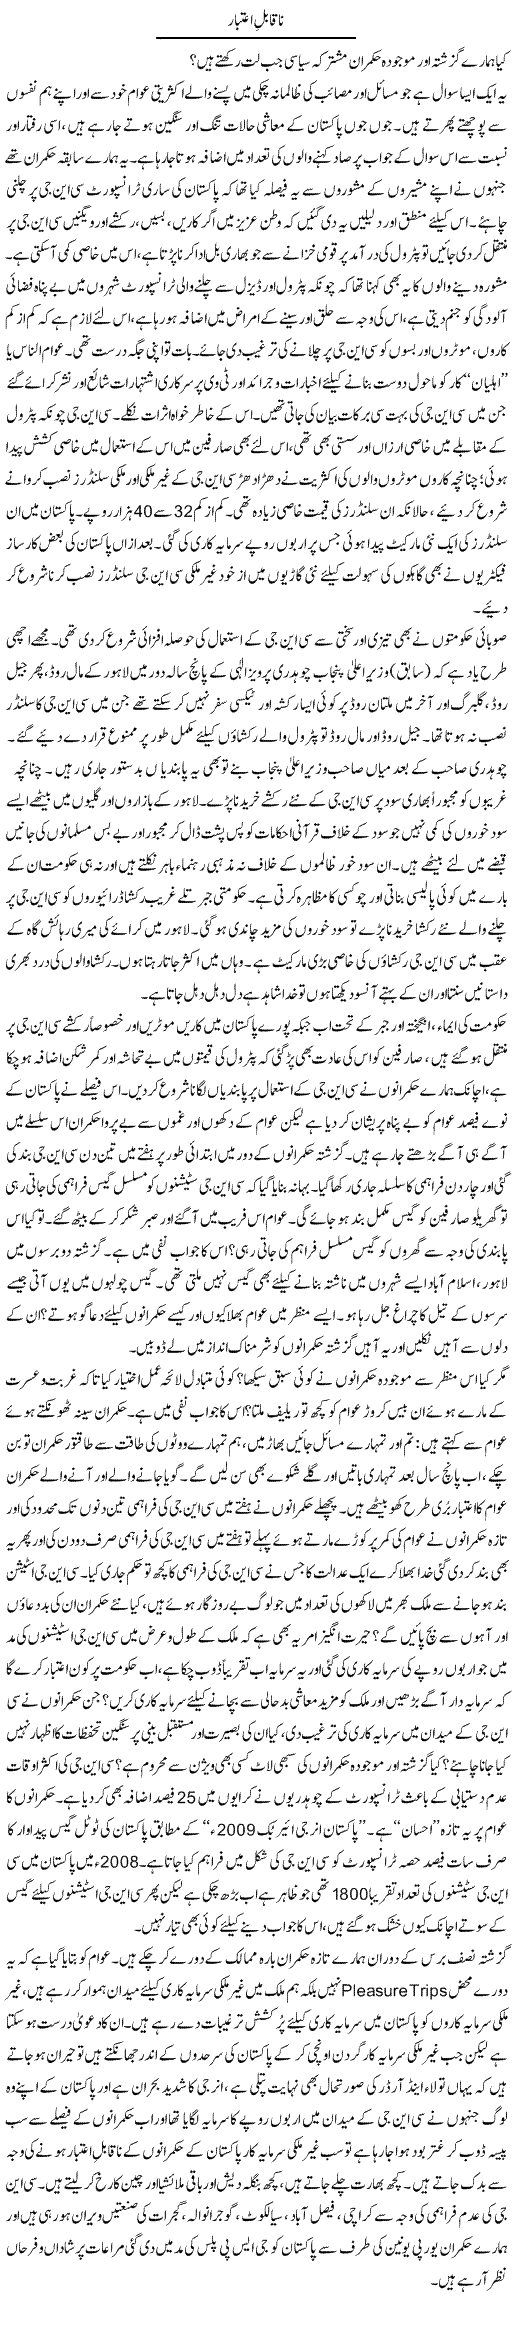 Naqabil Aetebar | Tanveer Qaisar Shahid | Daily Urdu Columns